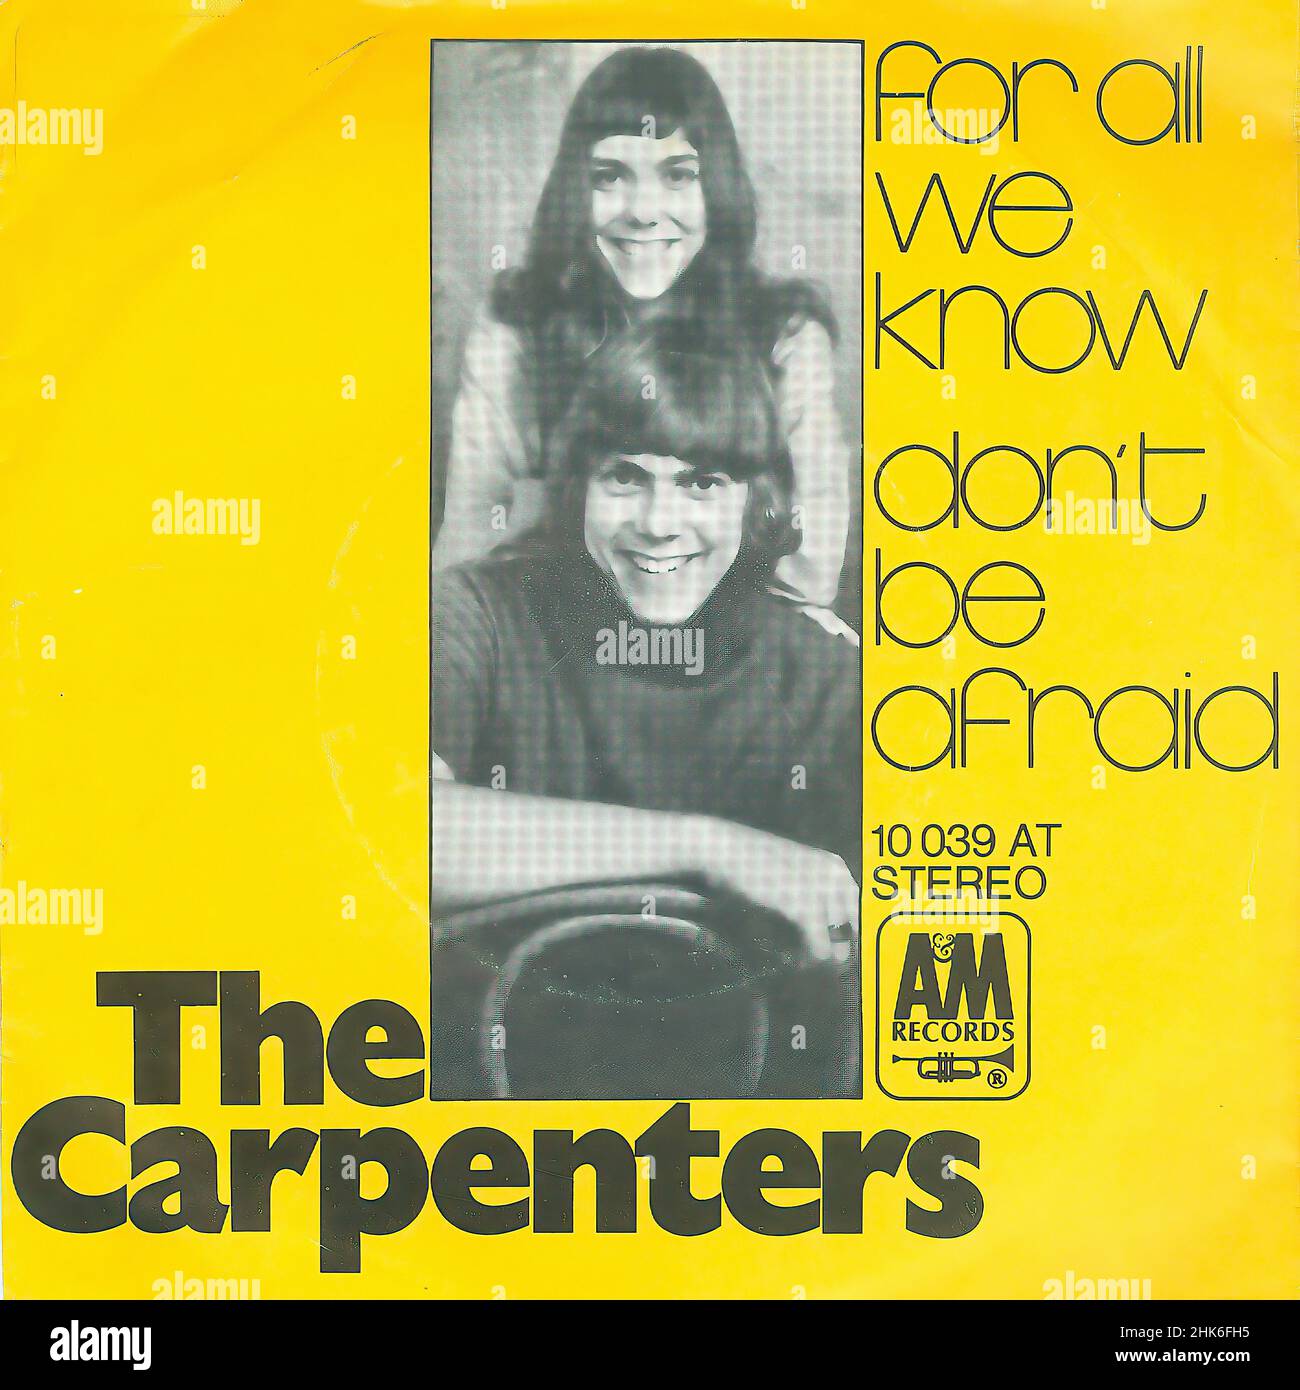 Carpenters – Rainy Days & Mondays / For All We Know (1971, Vinyl